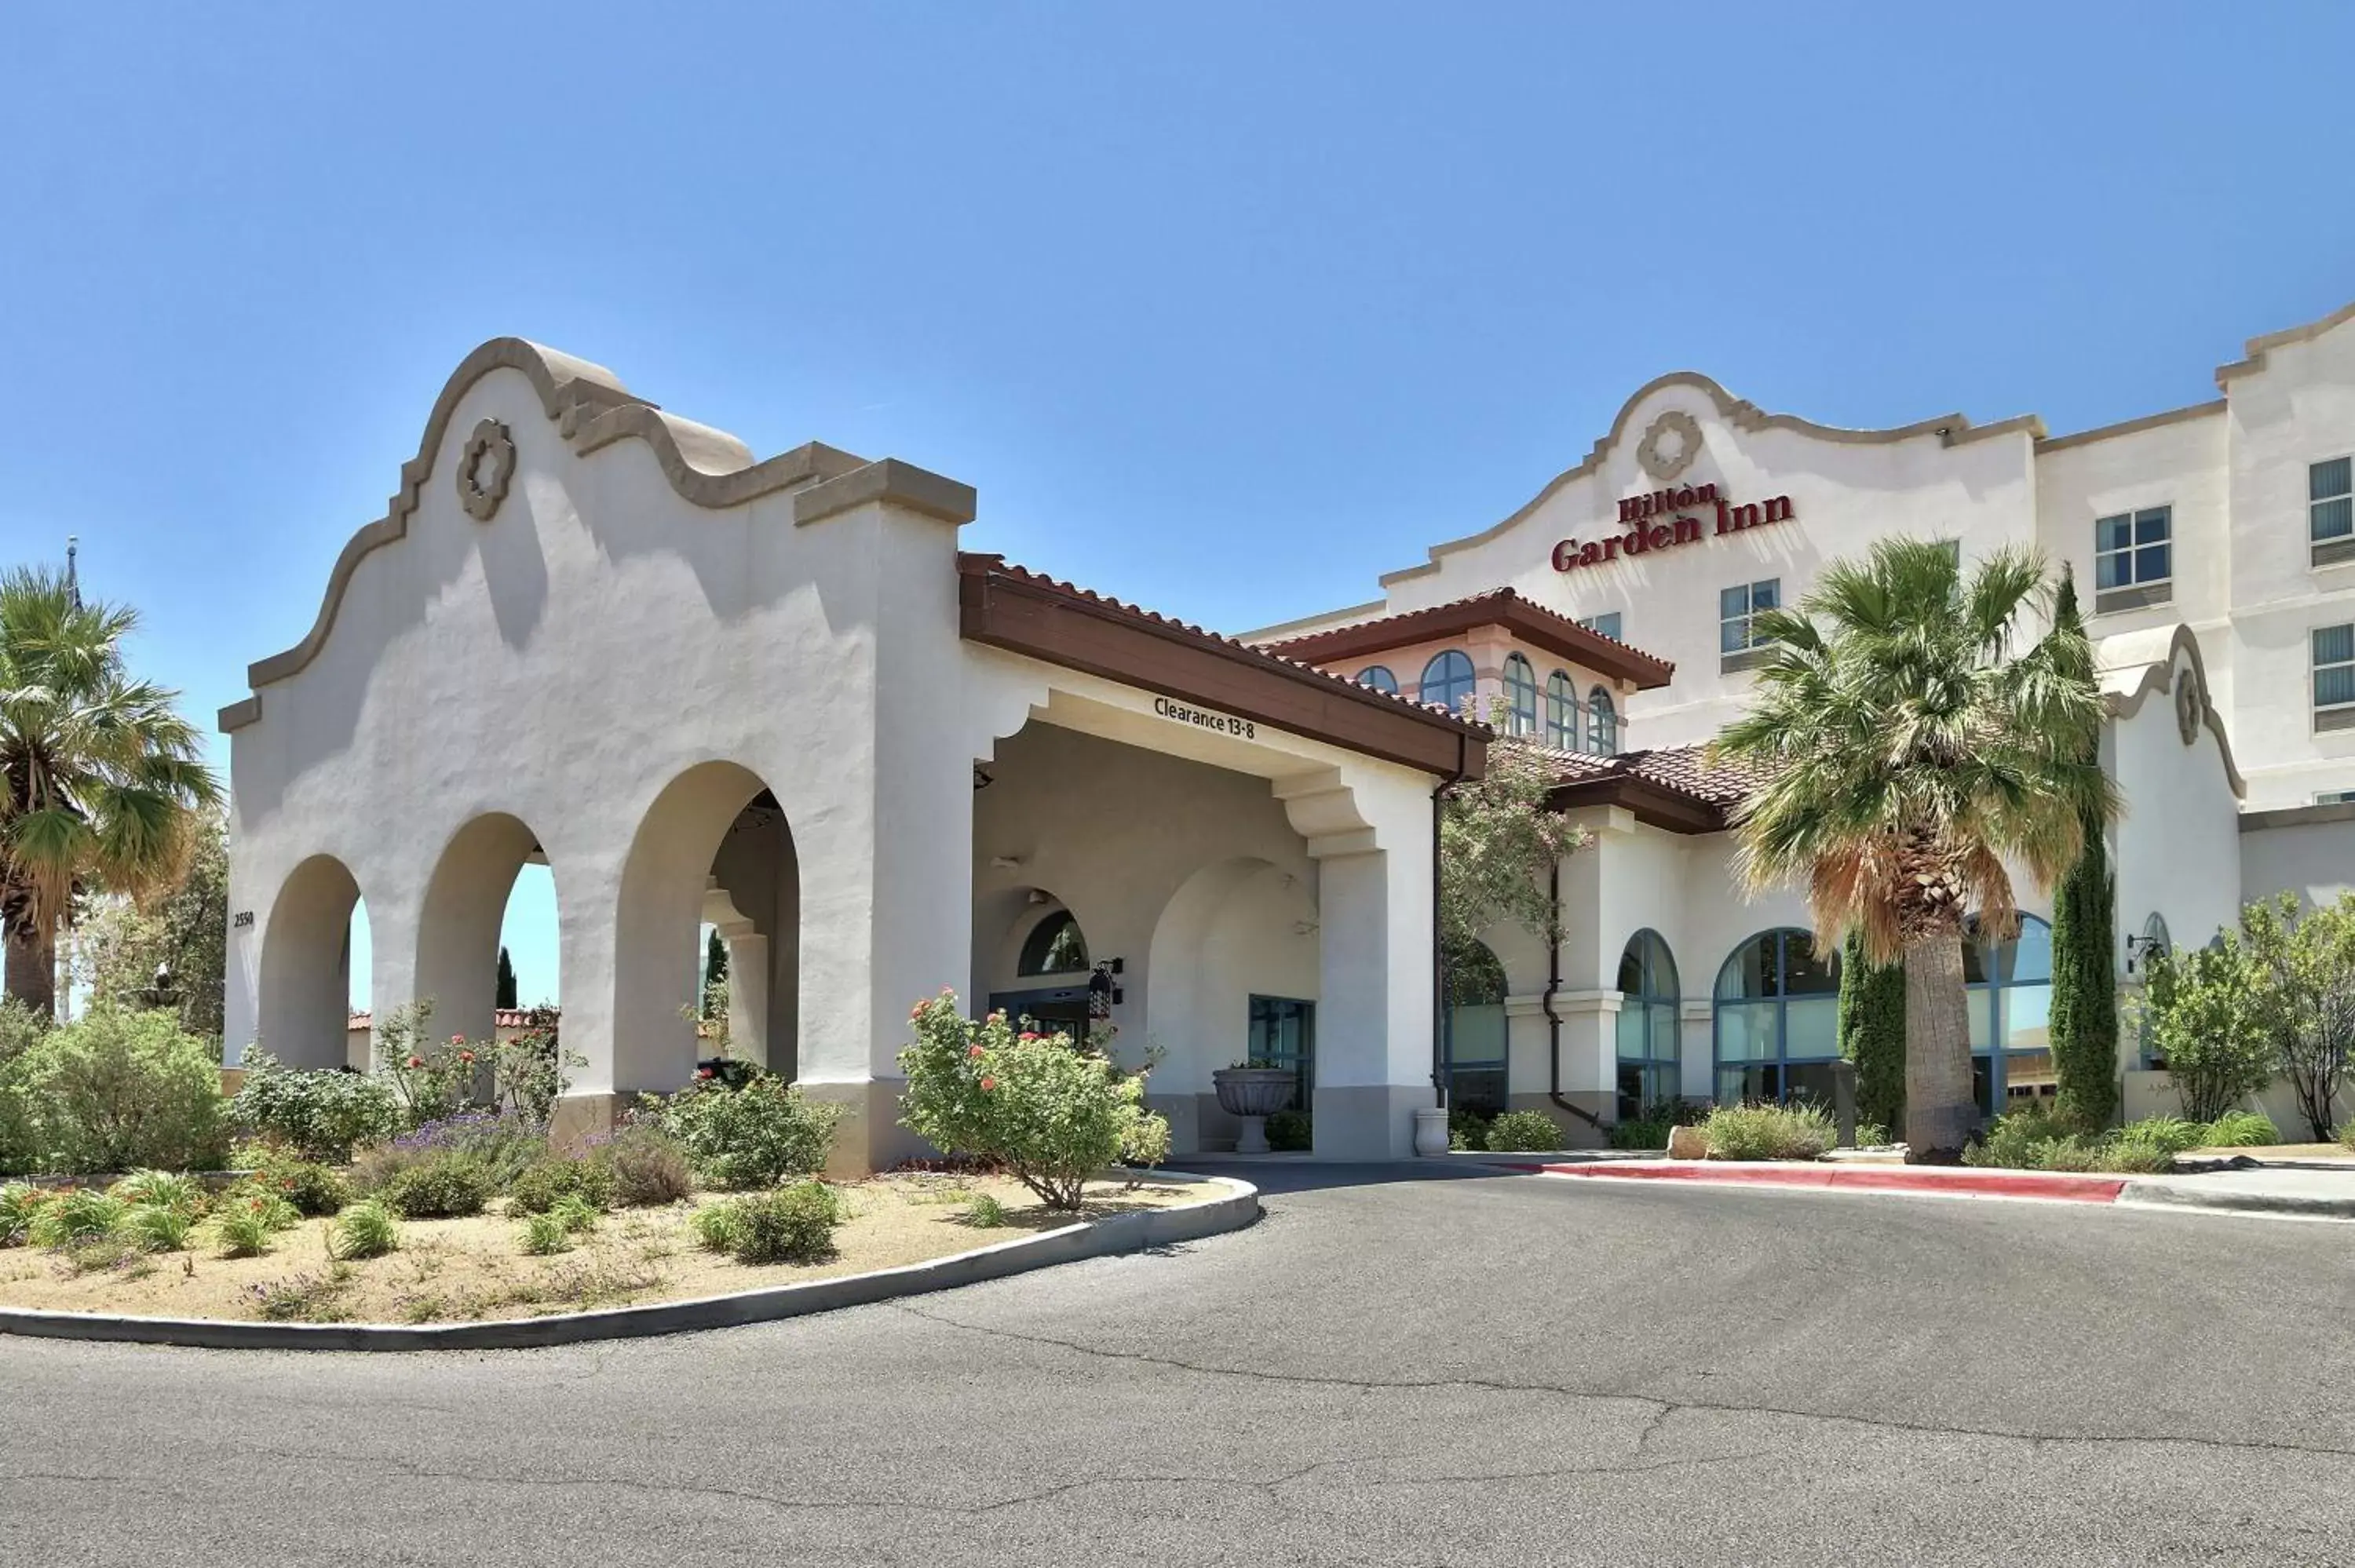 Property Building in Hilton Garden Inn Las Cruces